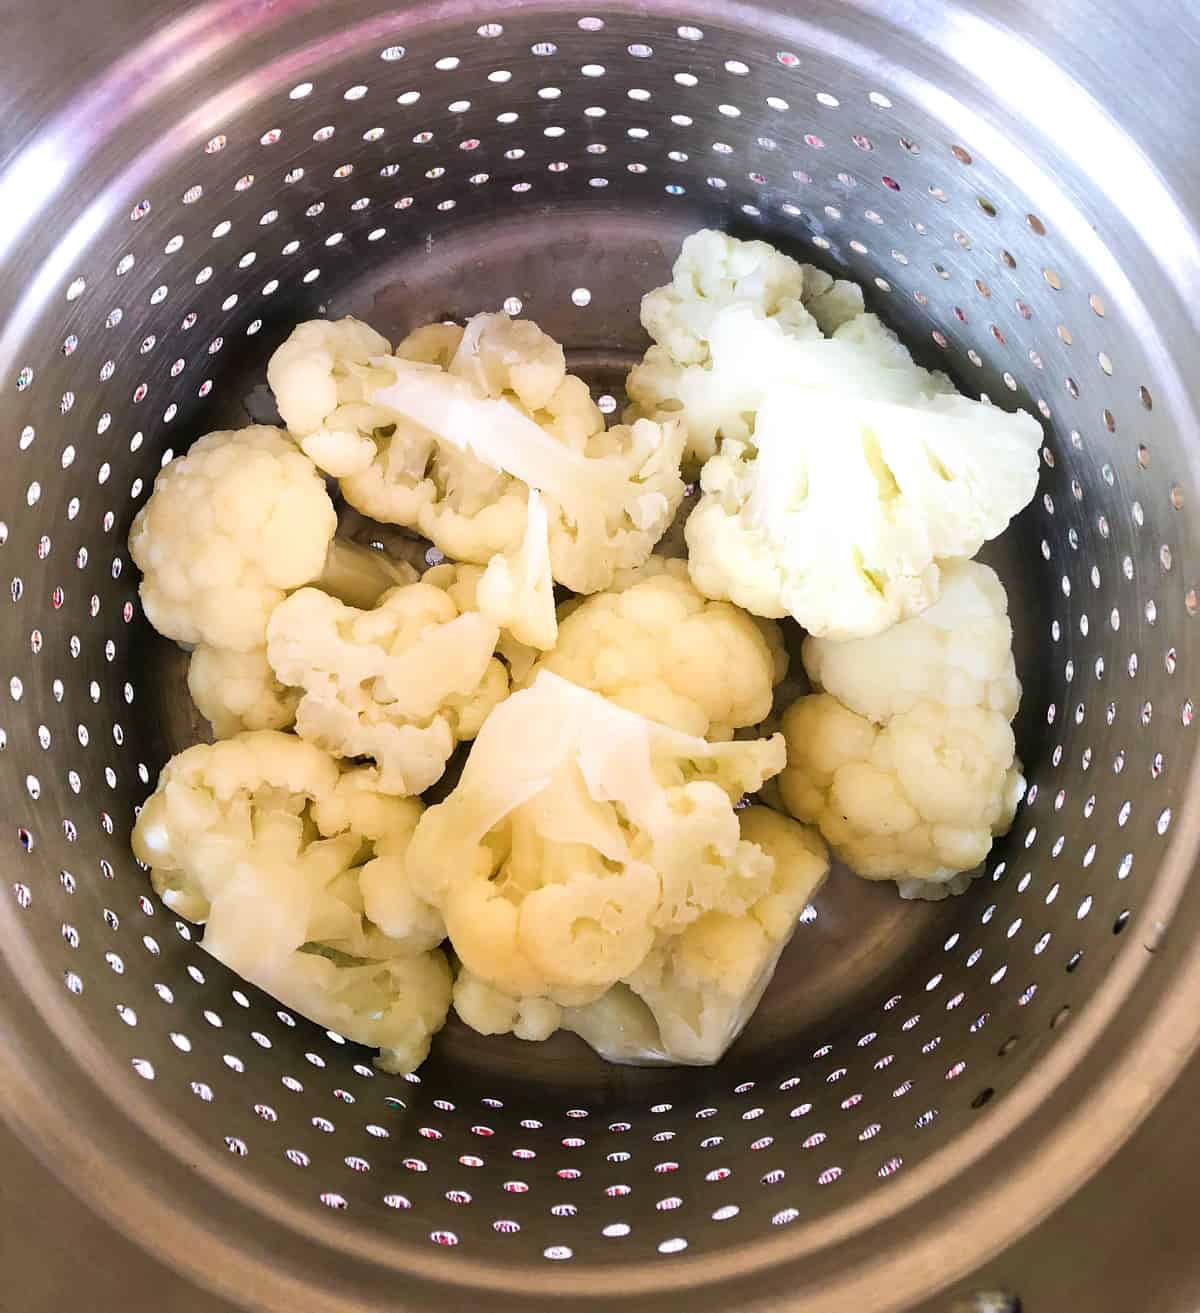 Steam cauliflower chunks for ten minutes or until tender. 